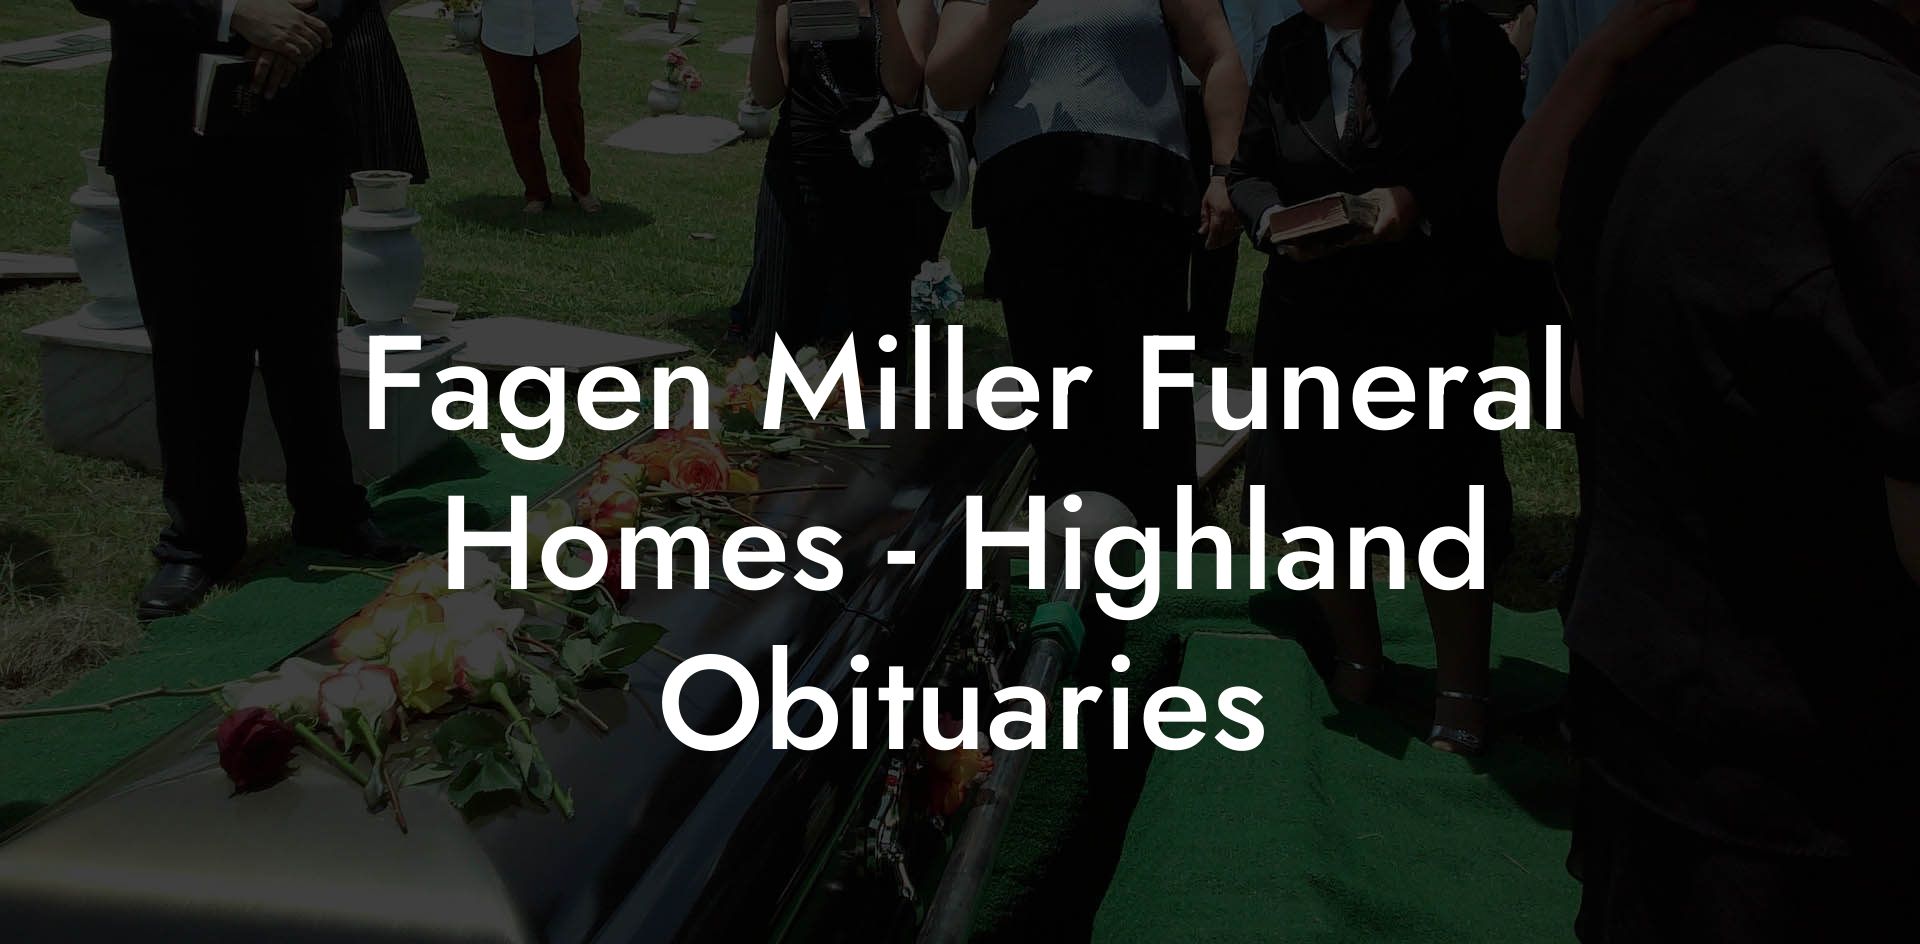 Fagen Miller Funeral Homes - Highland Obituaries